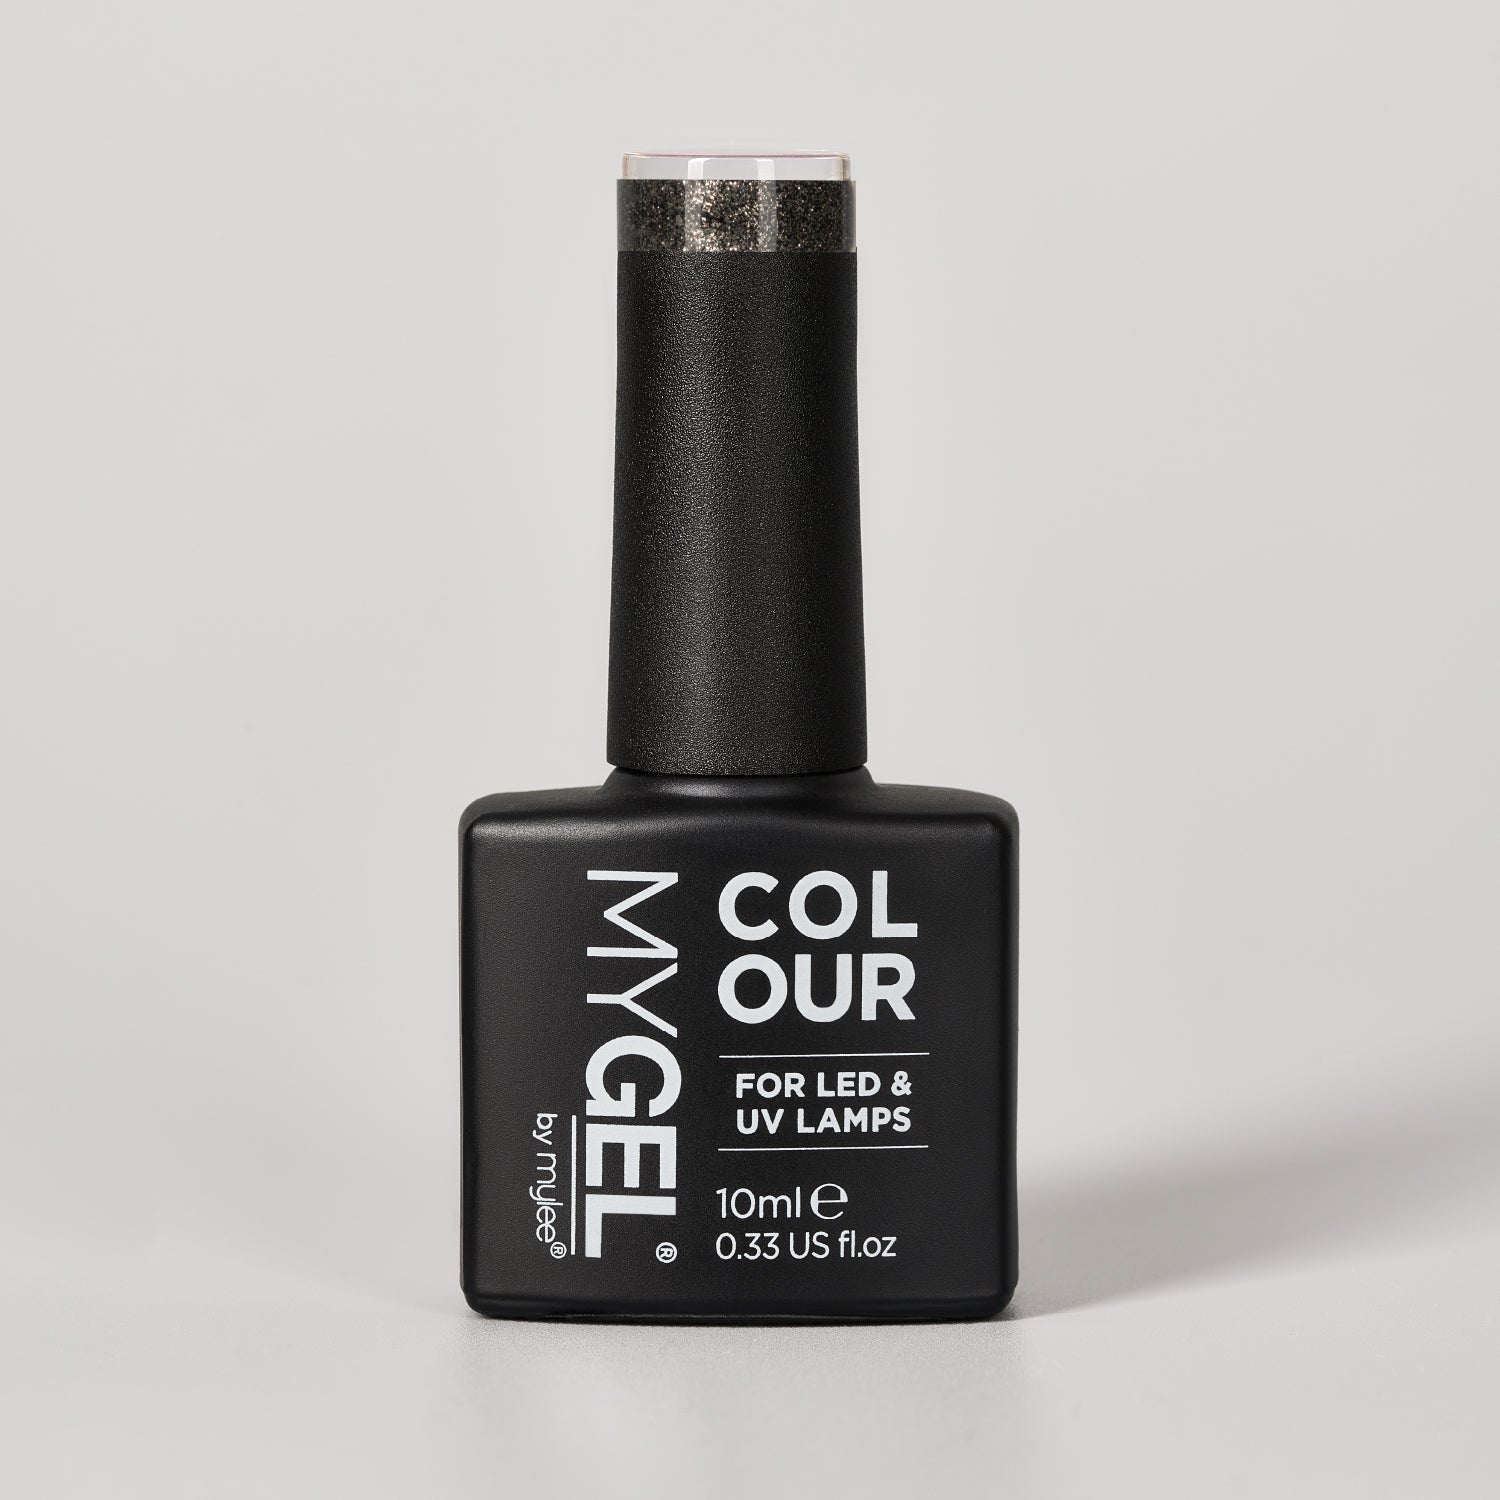 Mylee Rock Hard LED/UV Glitter / Black Gel Nail Polish 10ml – Long Lasting At Home Manicure/Pedicure, High Gloss And Chip Free Wear Nail Varnish